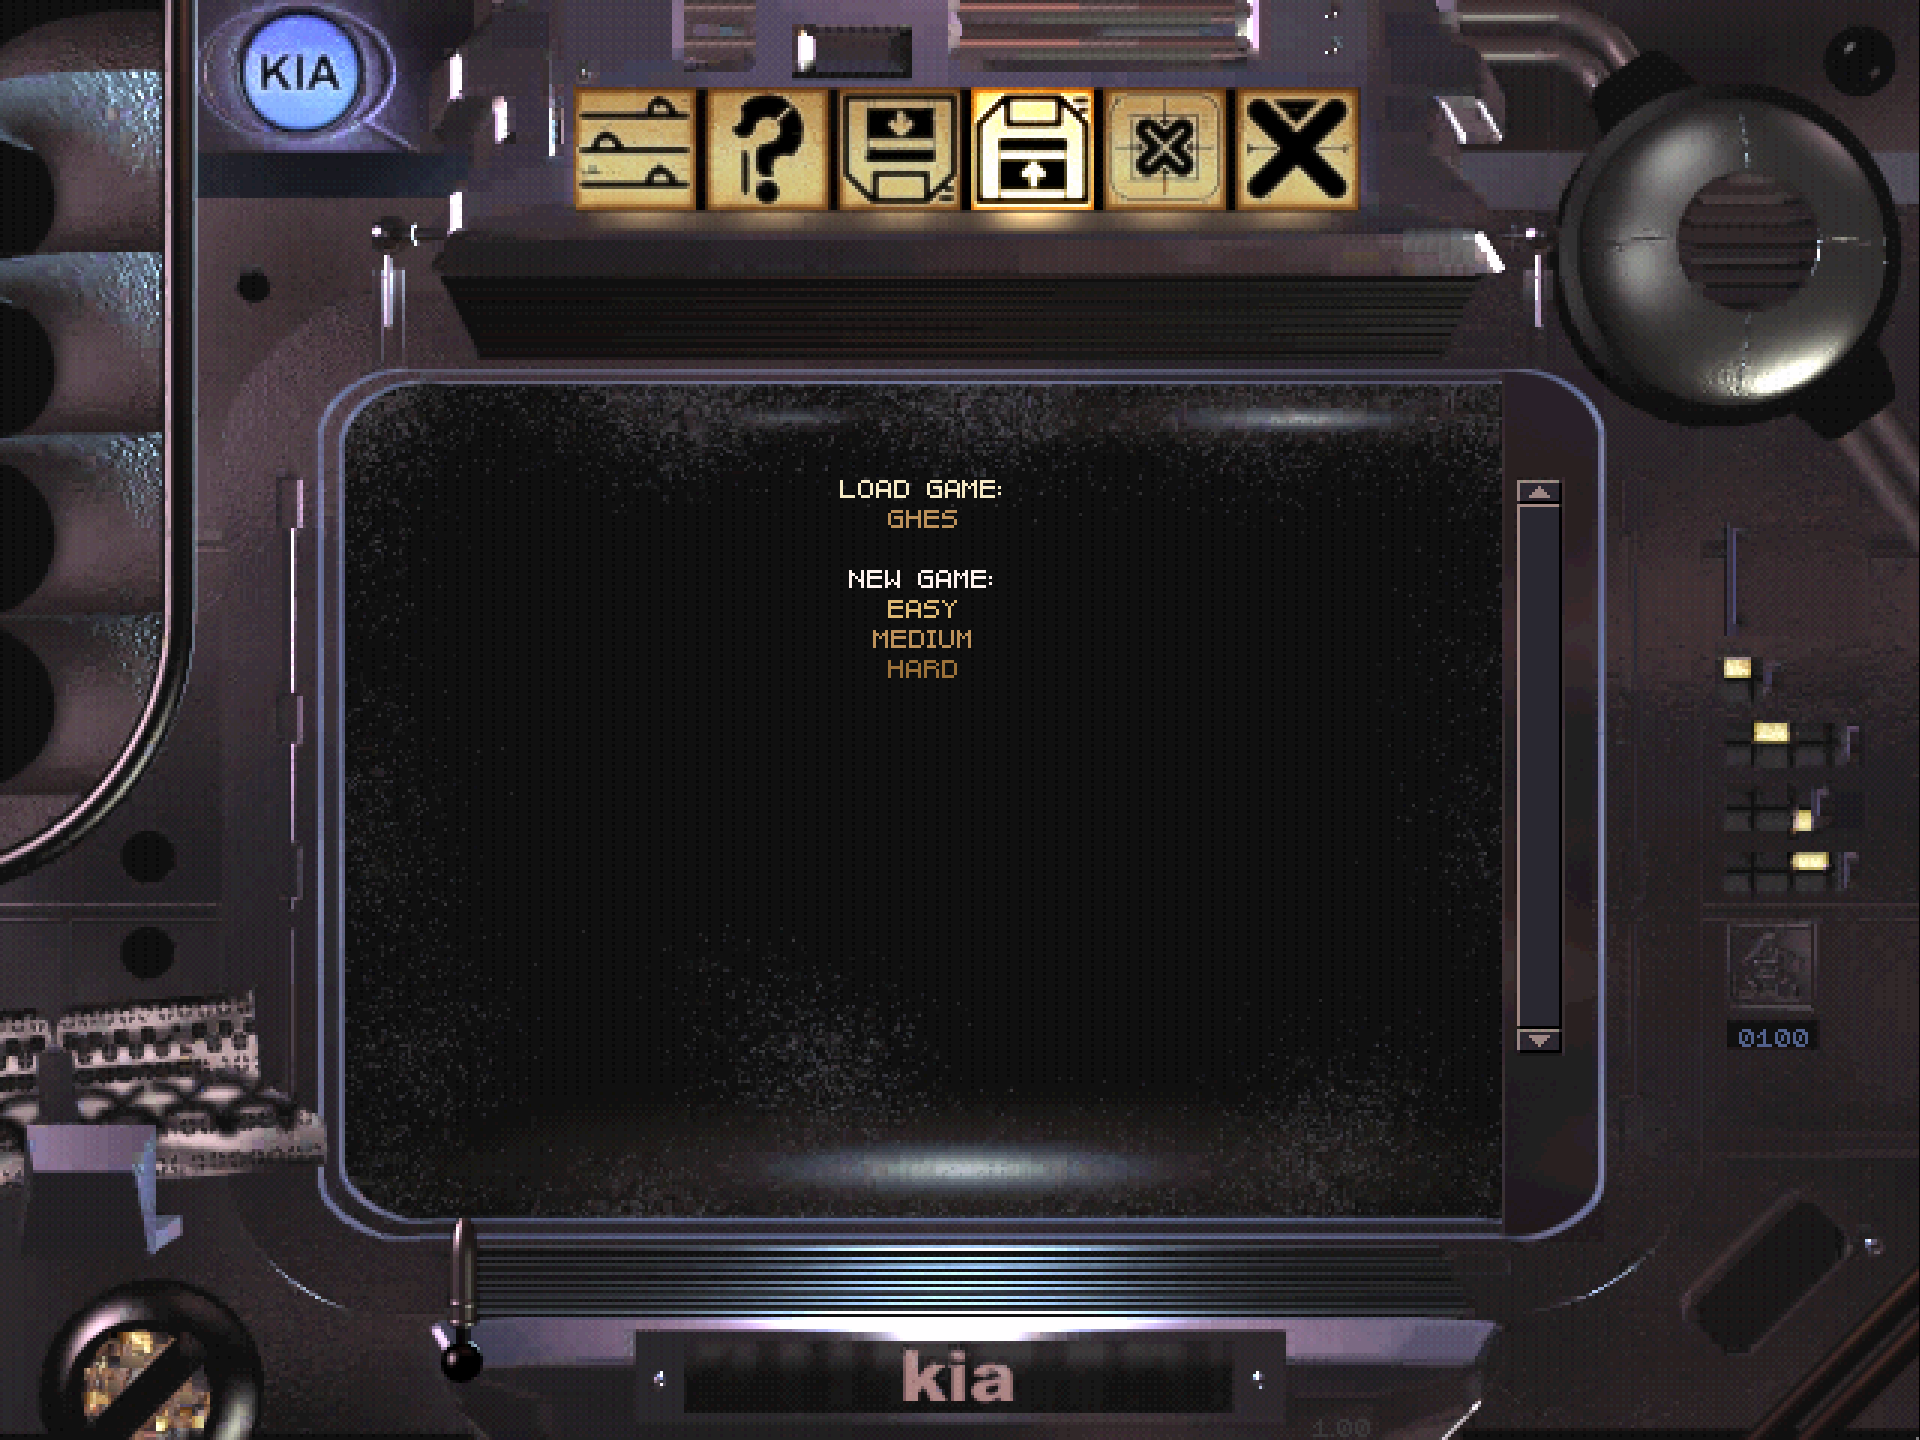 The main menu in a Blade Runner ScummVM screenshot.